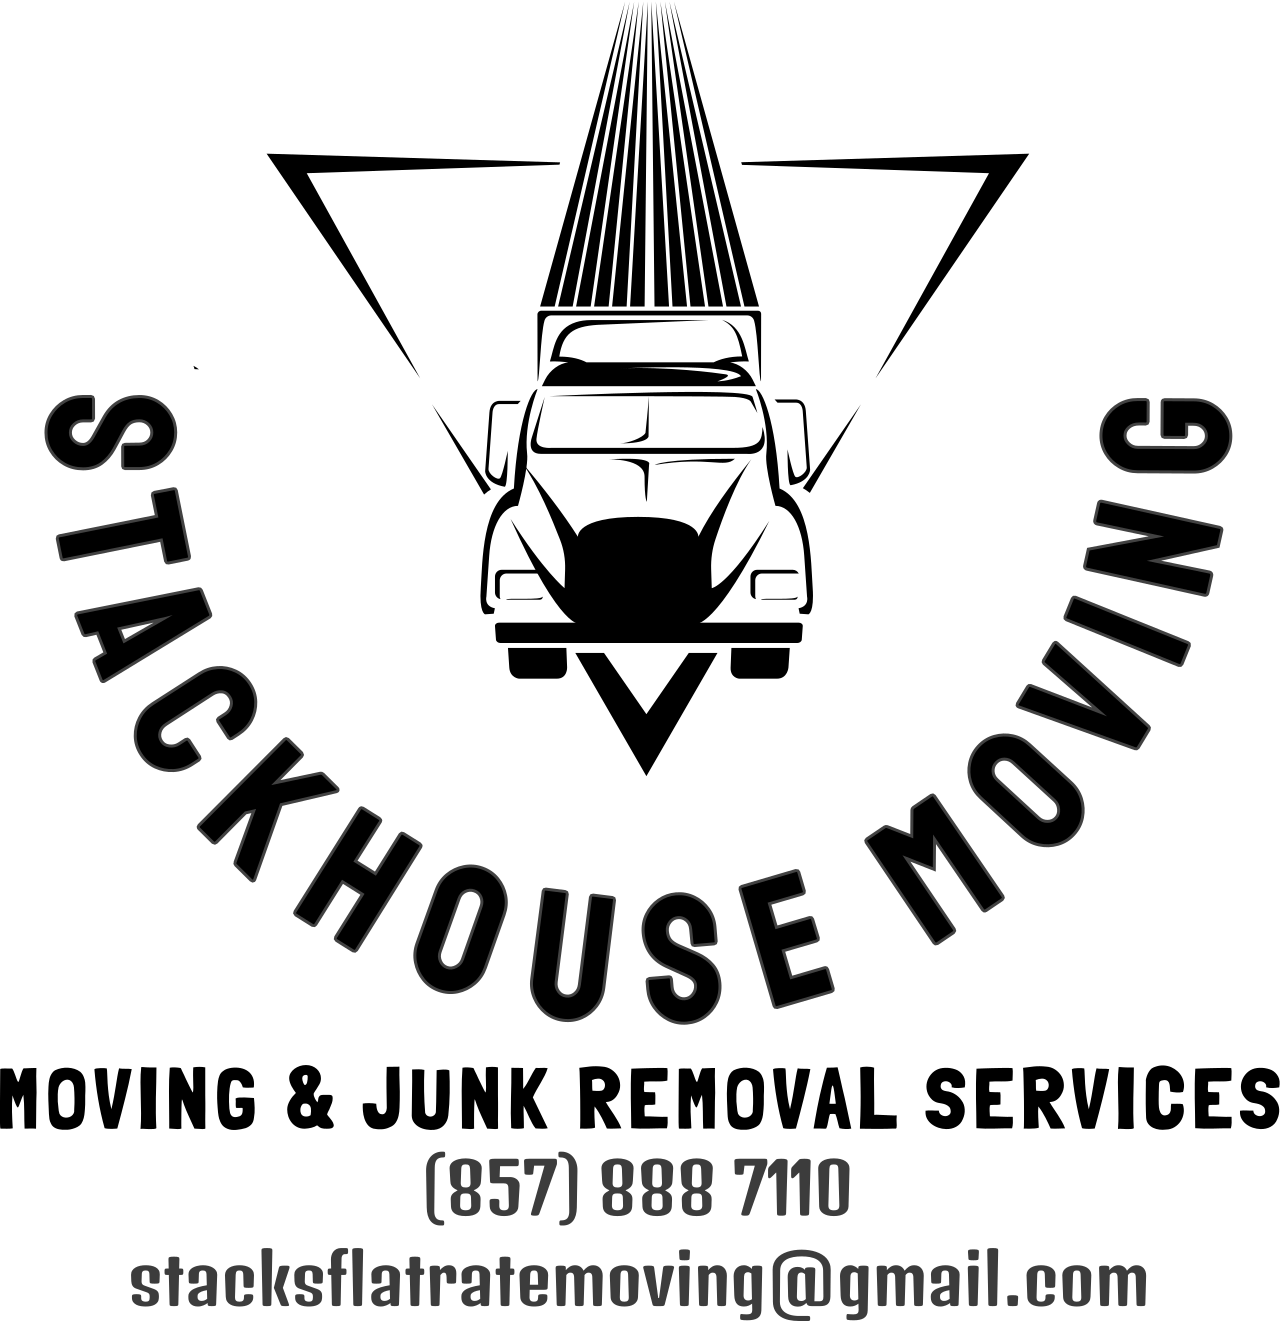 STACKHOUSE MOVING's logo